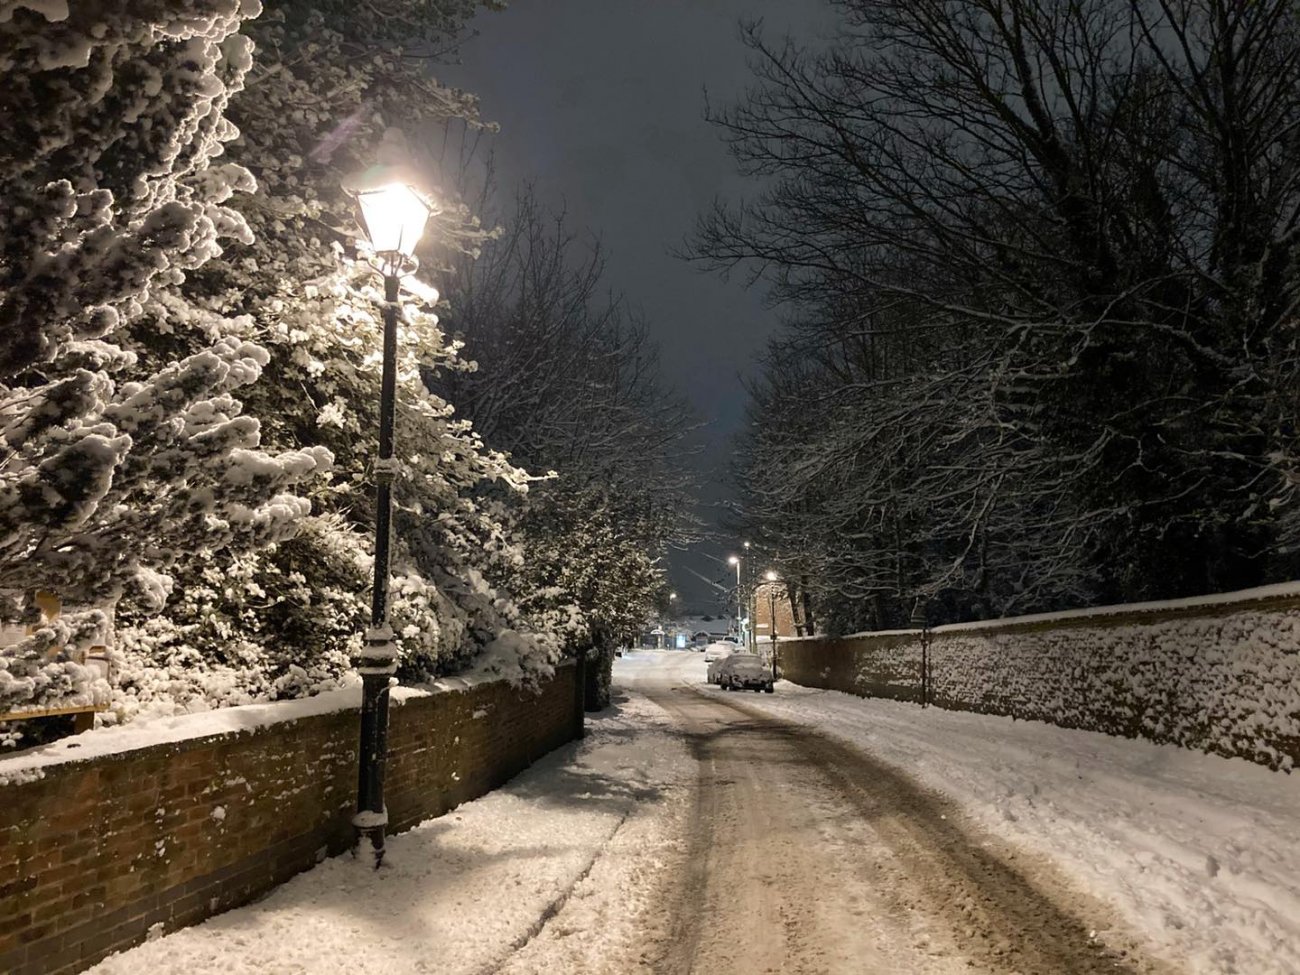 Photograph of Snowy Spondon Nights - Chapel Street looking towards Chapelside